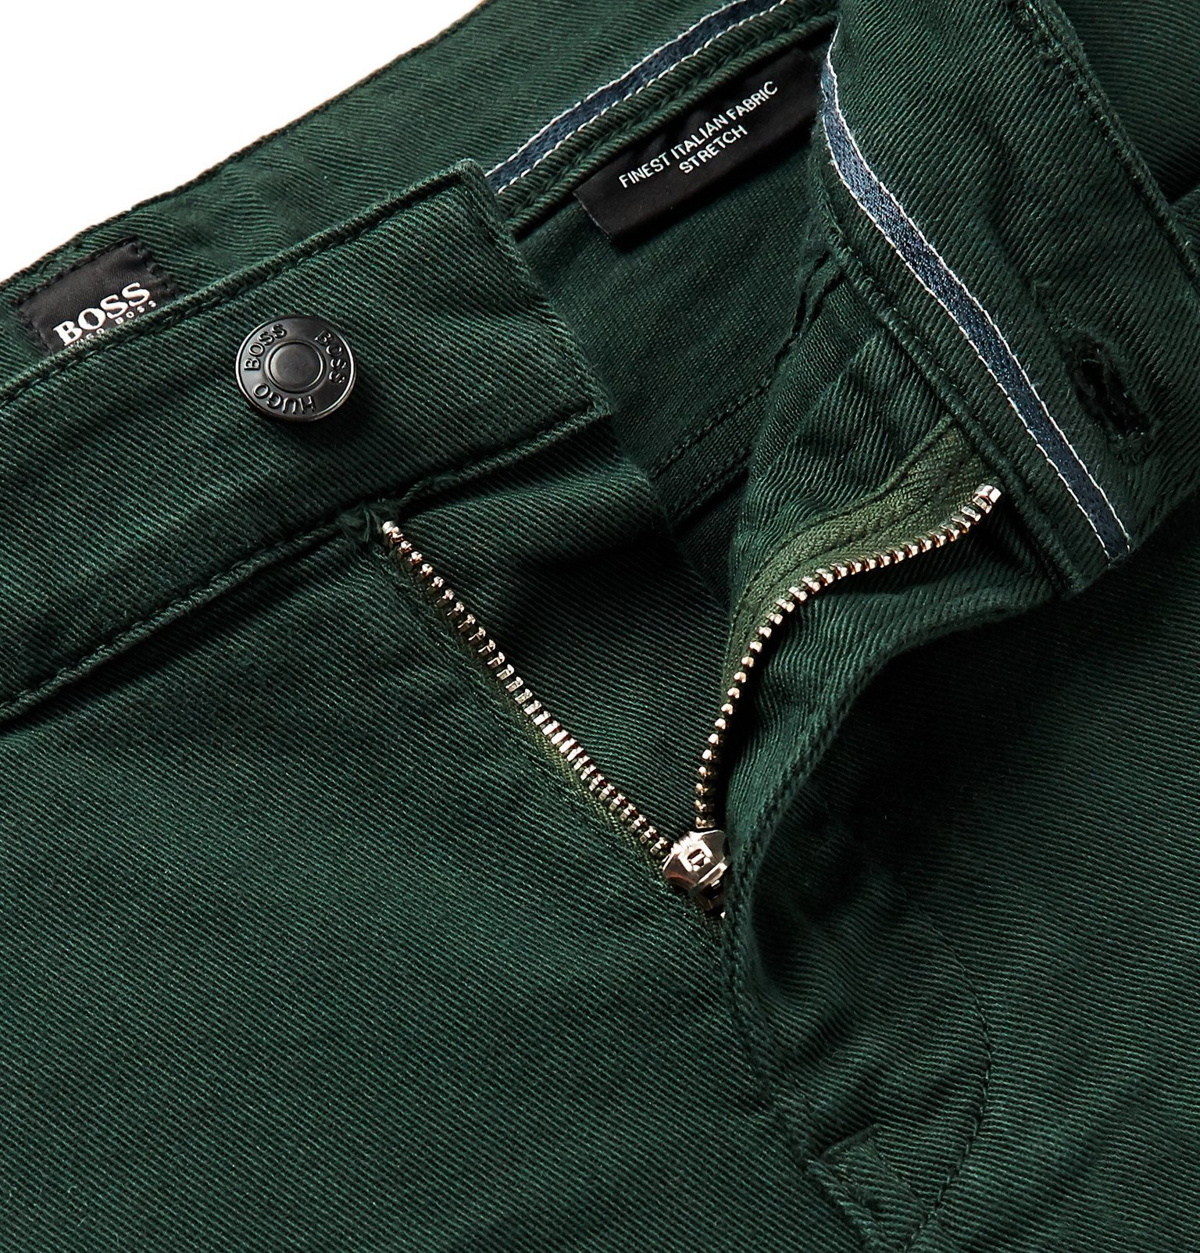 Hugo - Delaware Slim-Fit Stretch-Denim Jeans - Green Hugo Boss